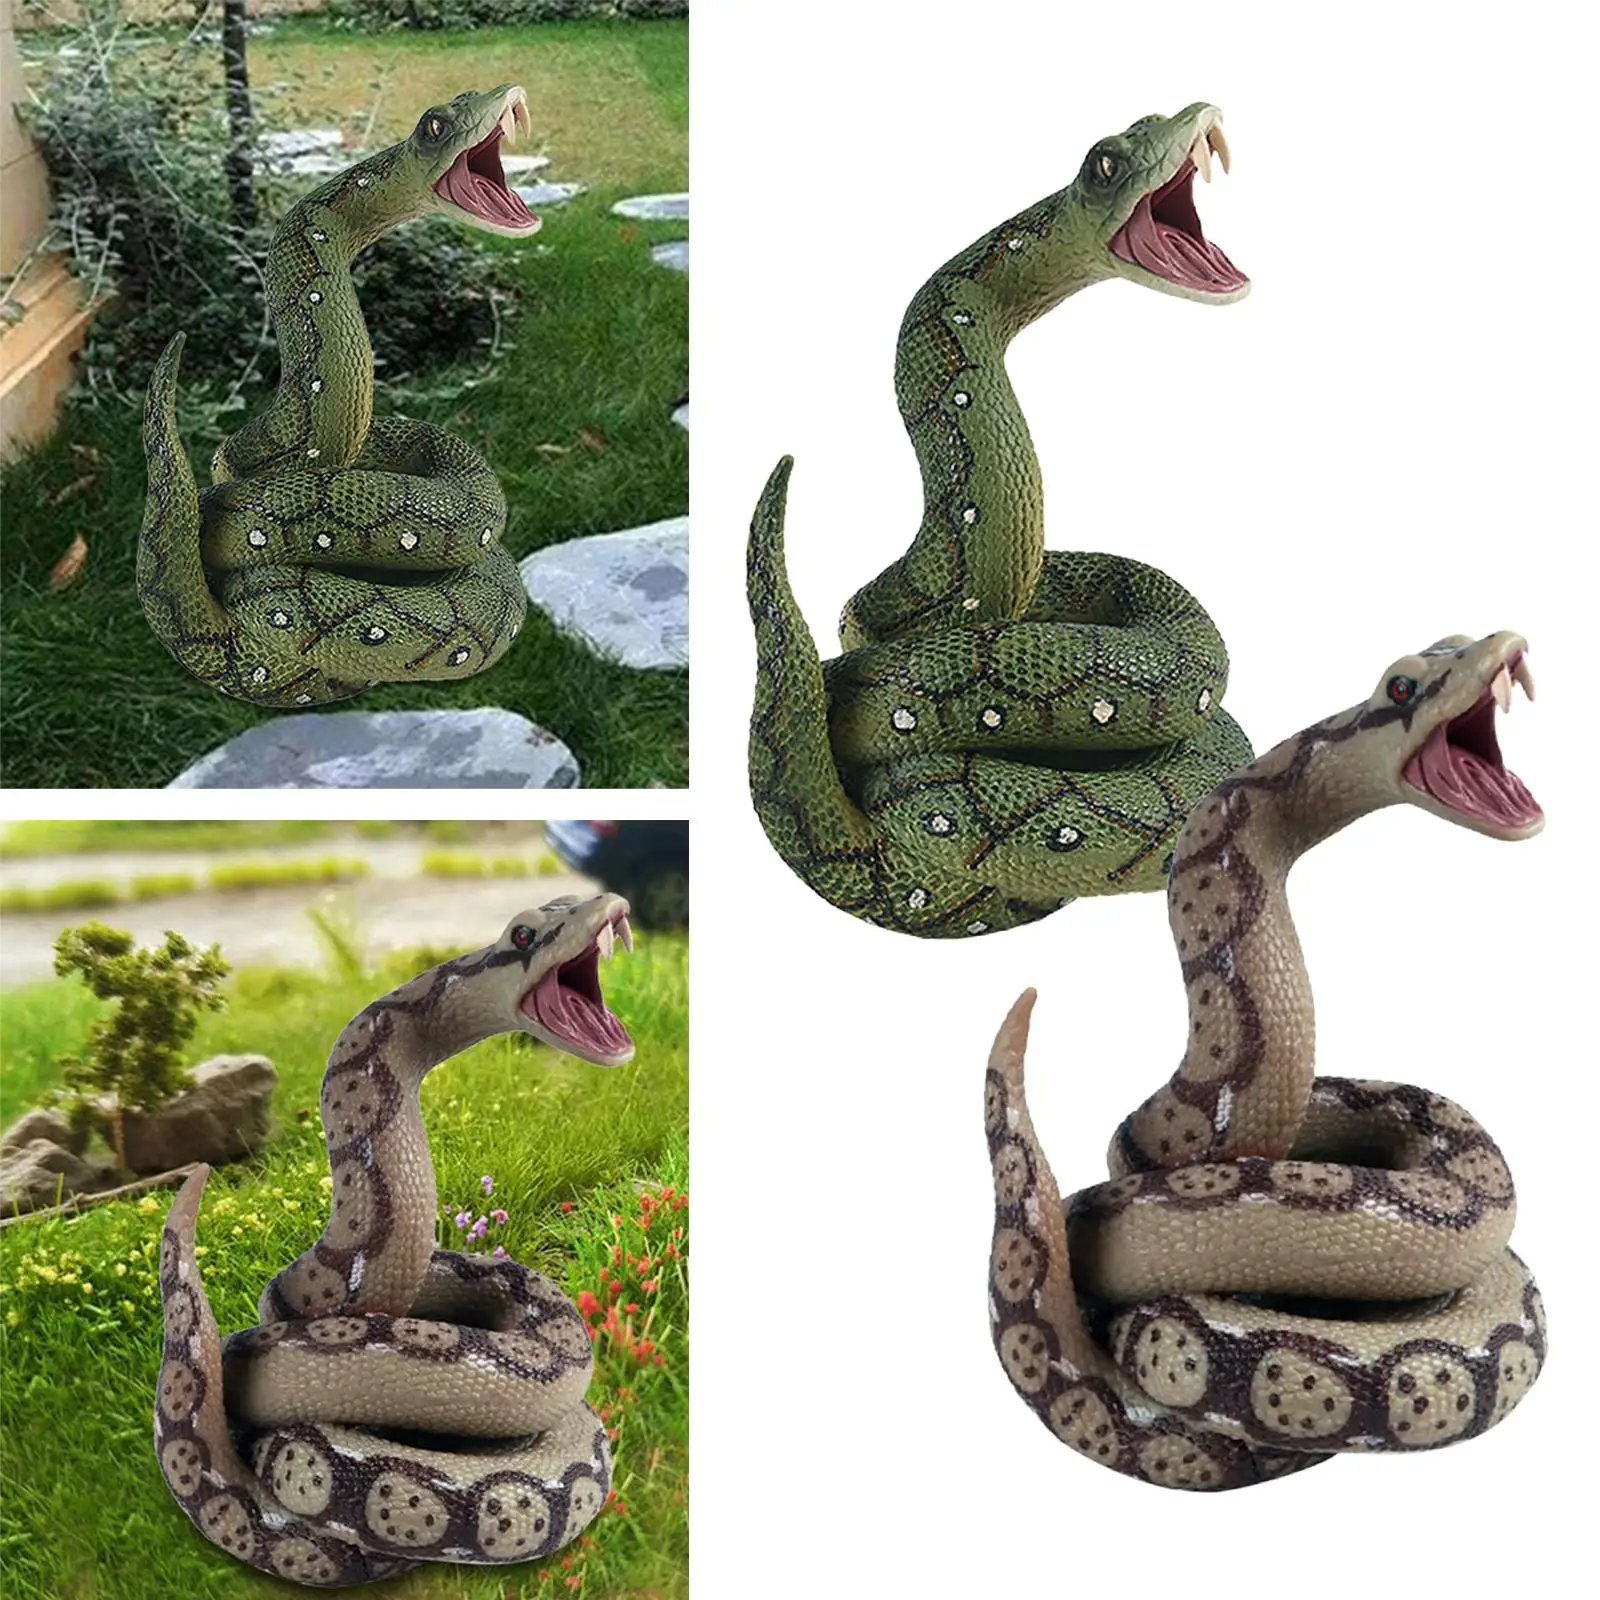 Realistic Snake Toys Horrifying Party Tricks Snake Figure Educational Toys Snake Props Scary Snake Toy Artifical Snake Figurine